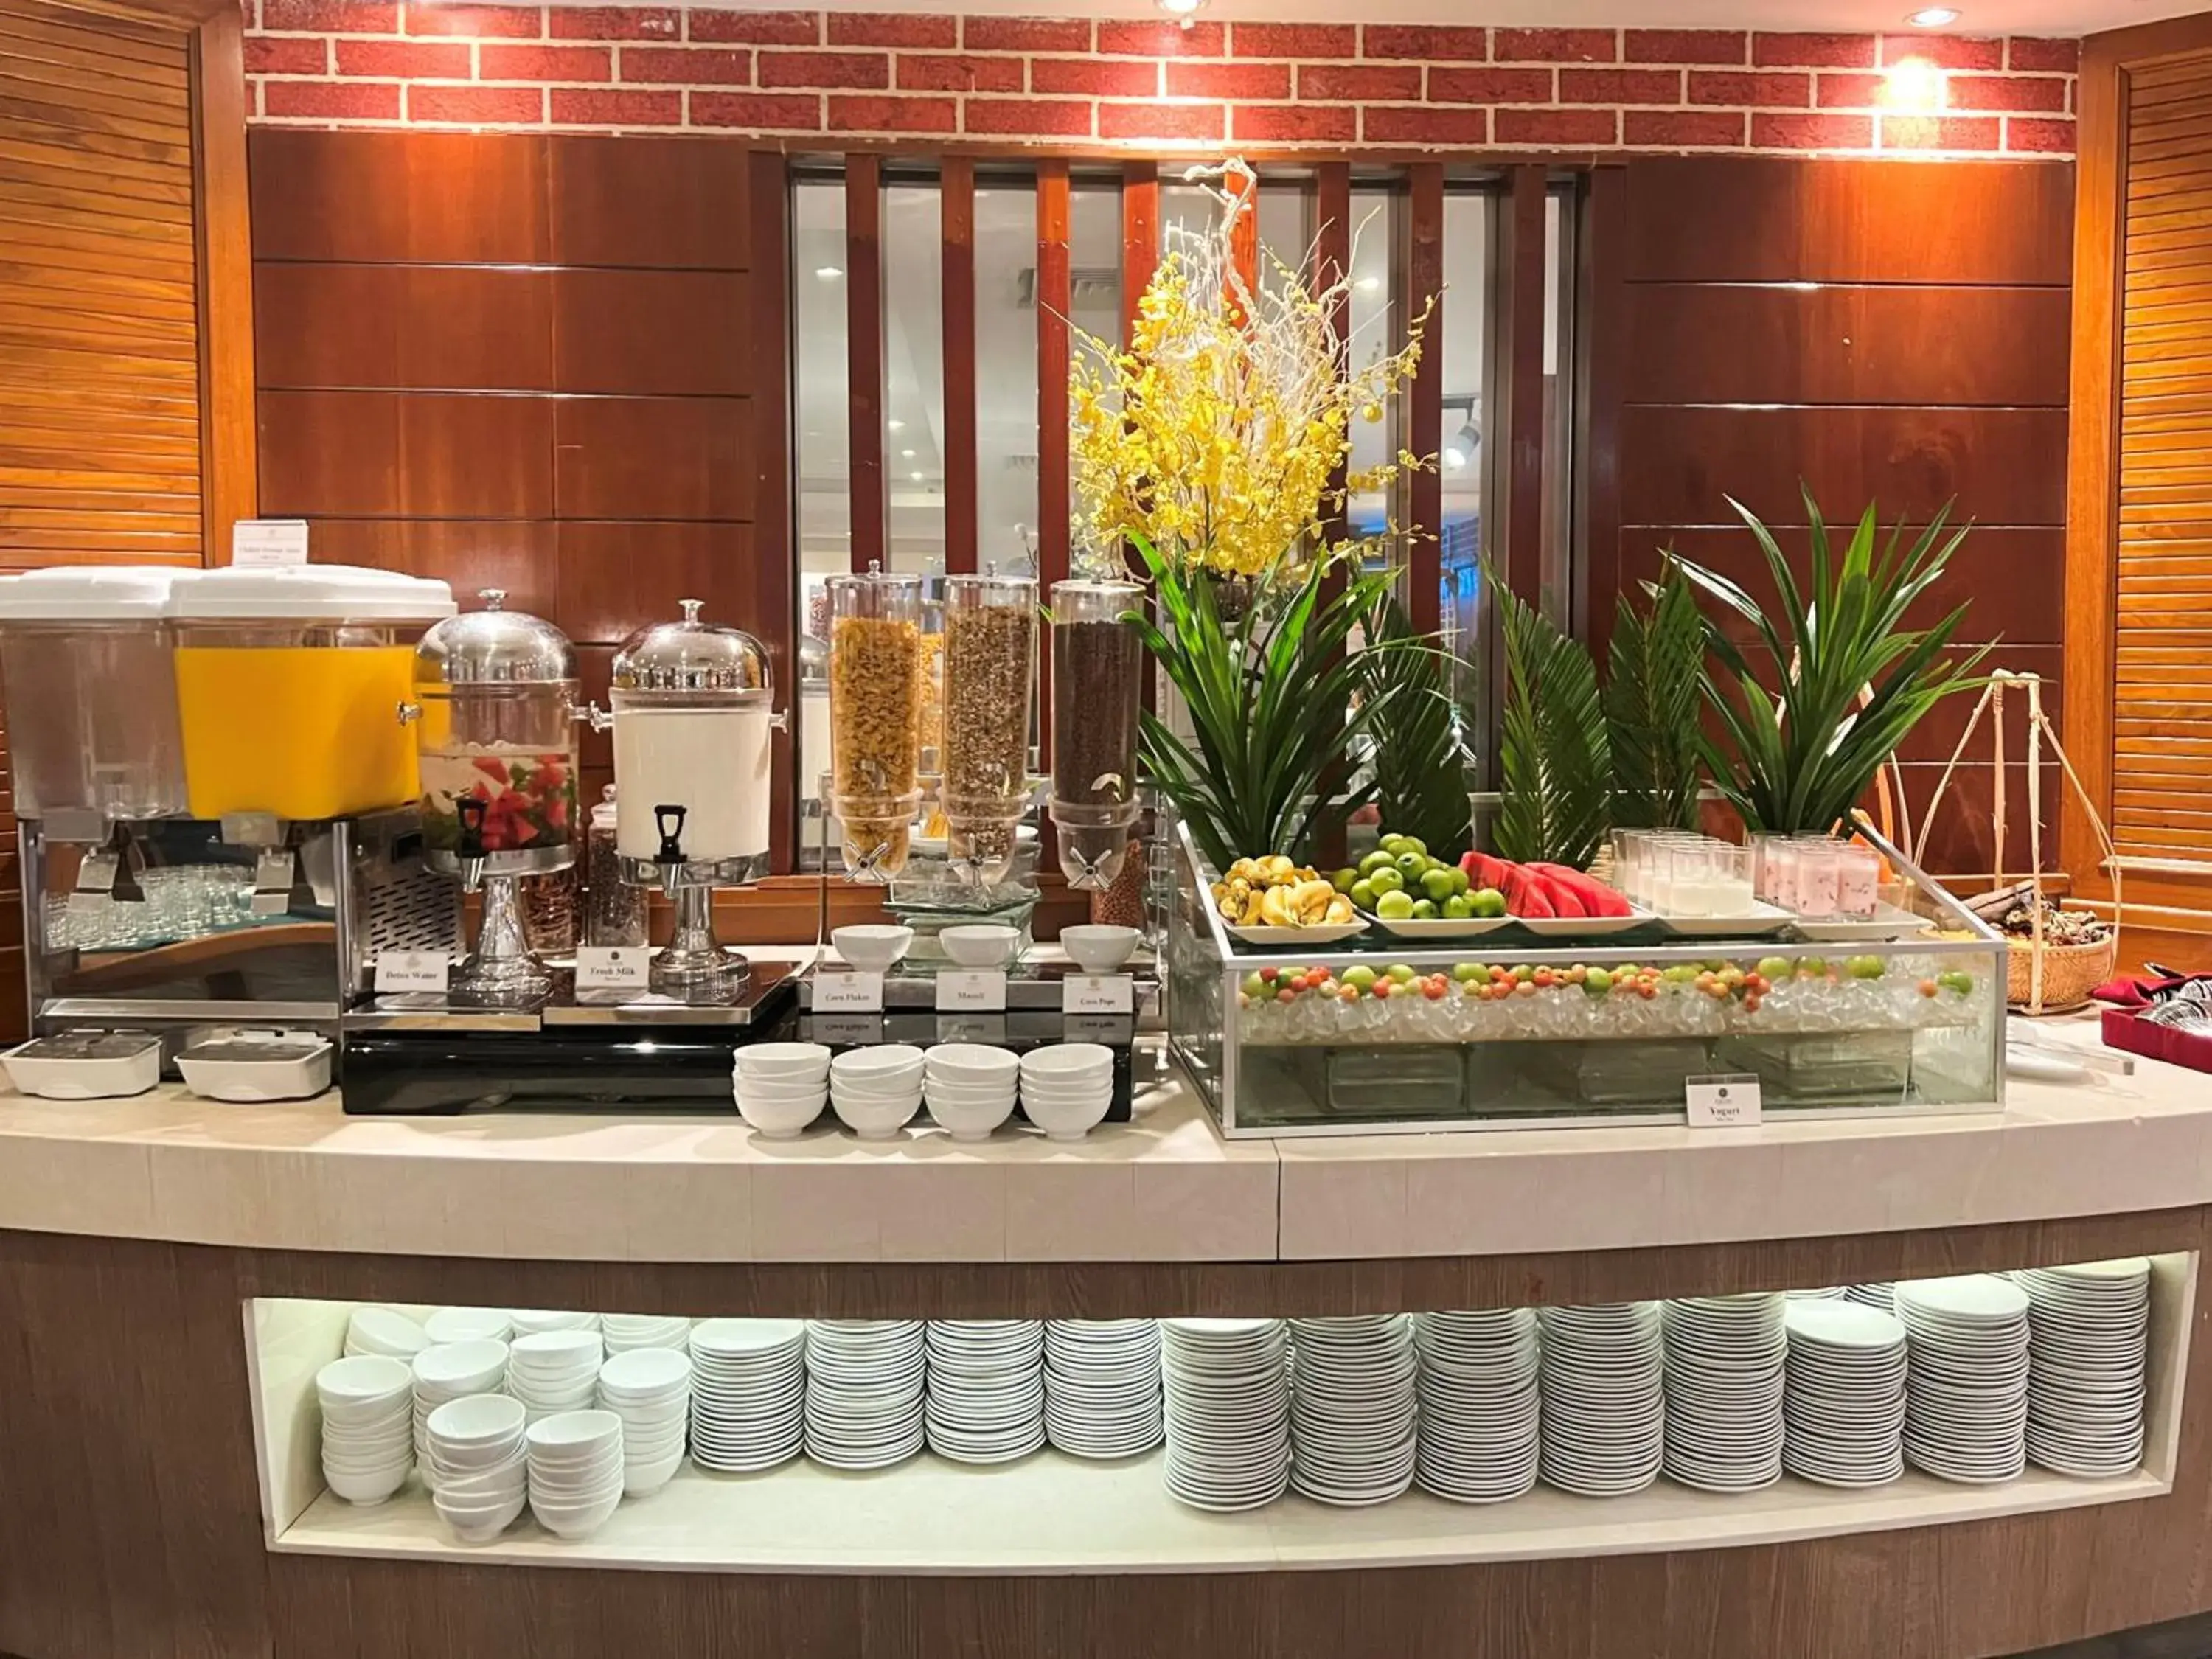 Buffet breakfast in Ramana Saigon Hotel